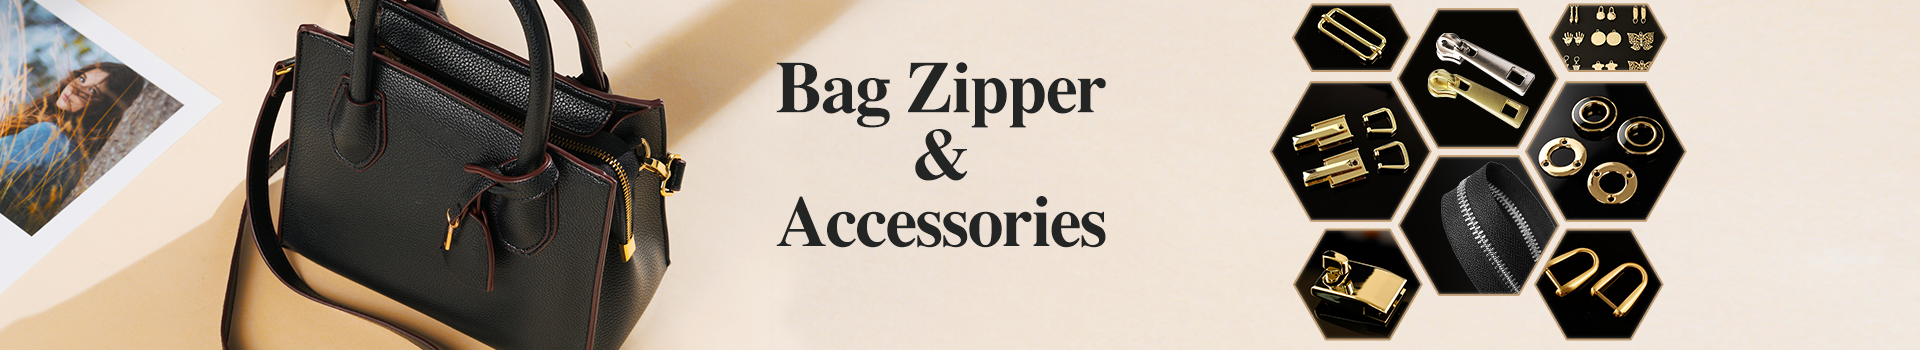 Bag zipper&Accessories